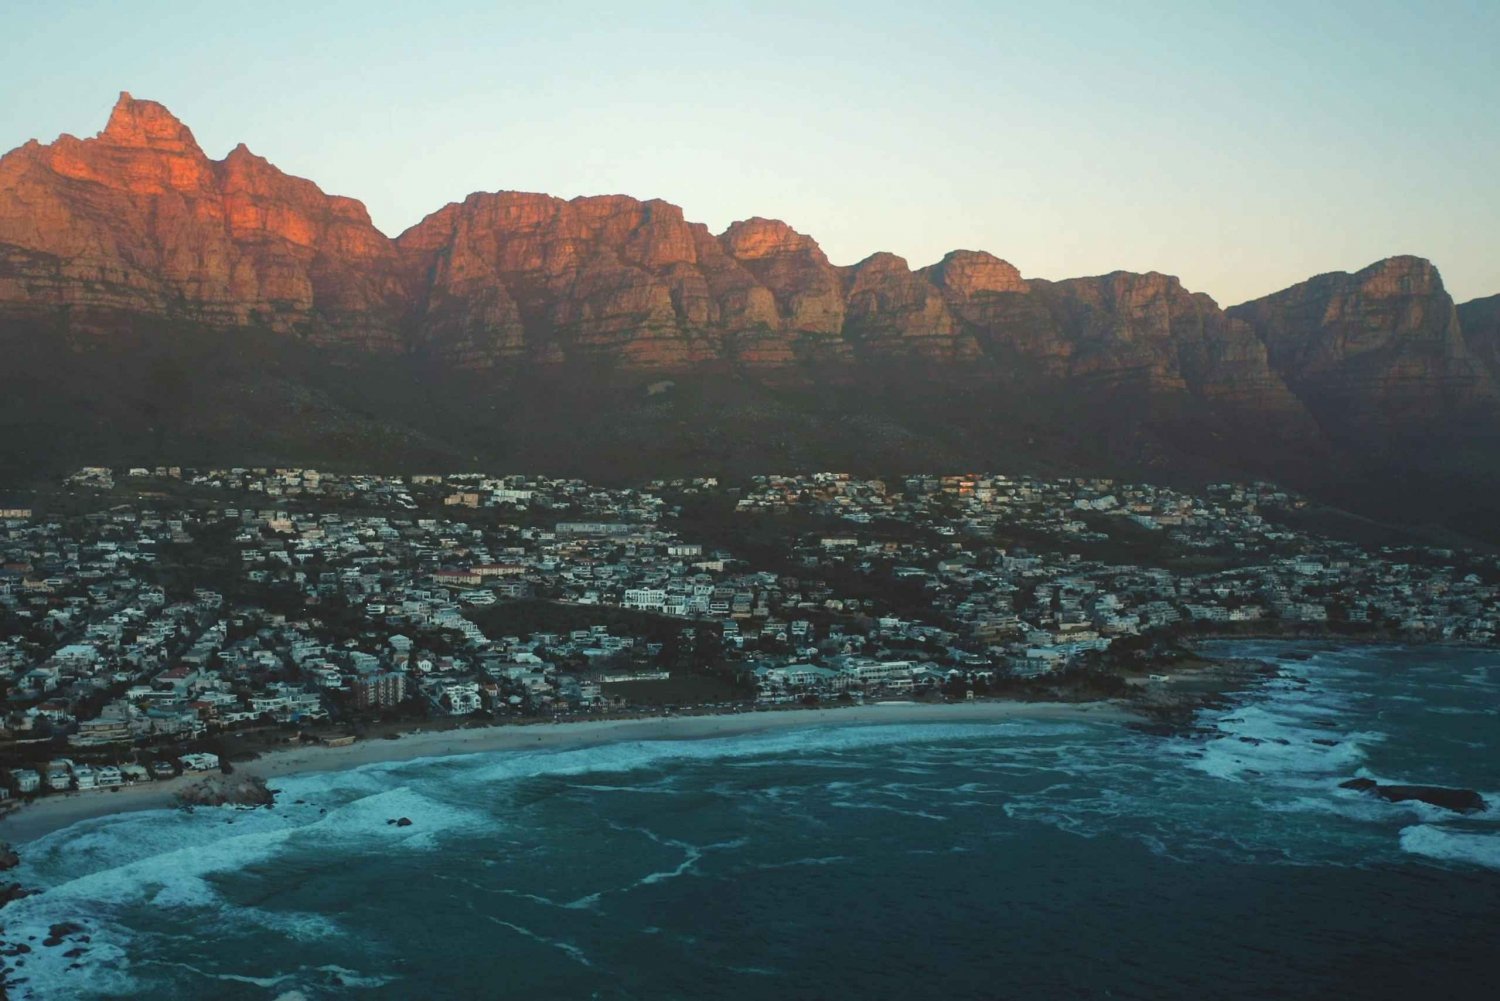 Zuid-Afrika: Het puntje van Afrika verkennen 14-daagse rondleiding